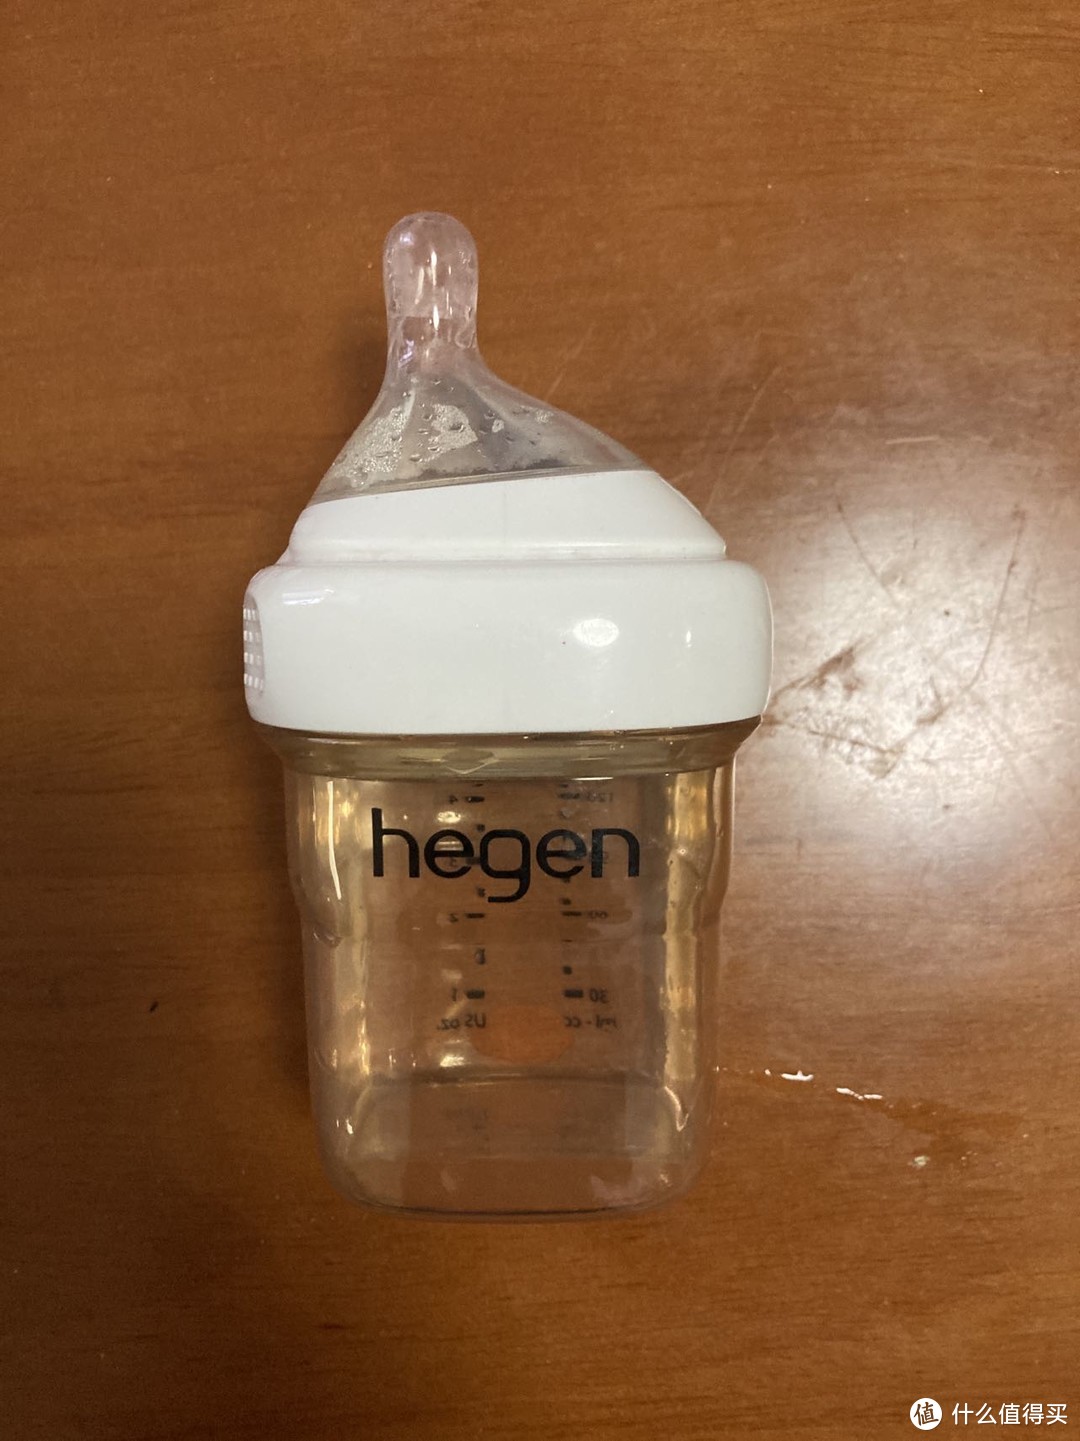 hegen的奶瓶，价格比较贵，实际我家宝宝使用的时候没发现与贝亲的明显区别